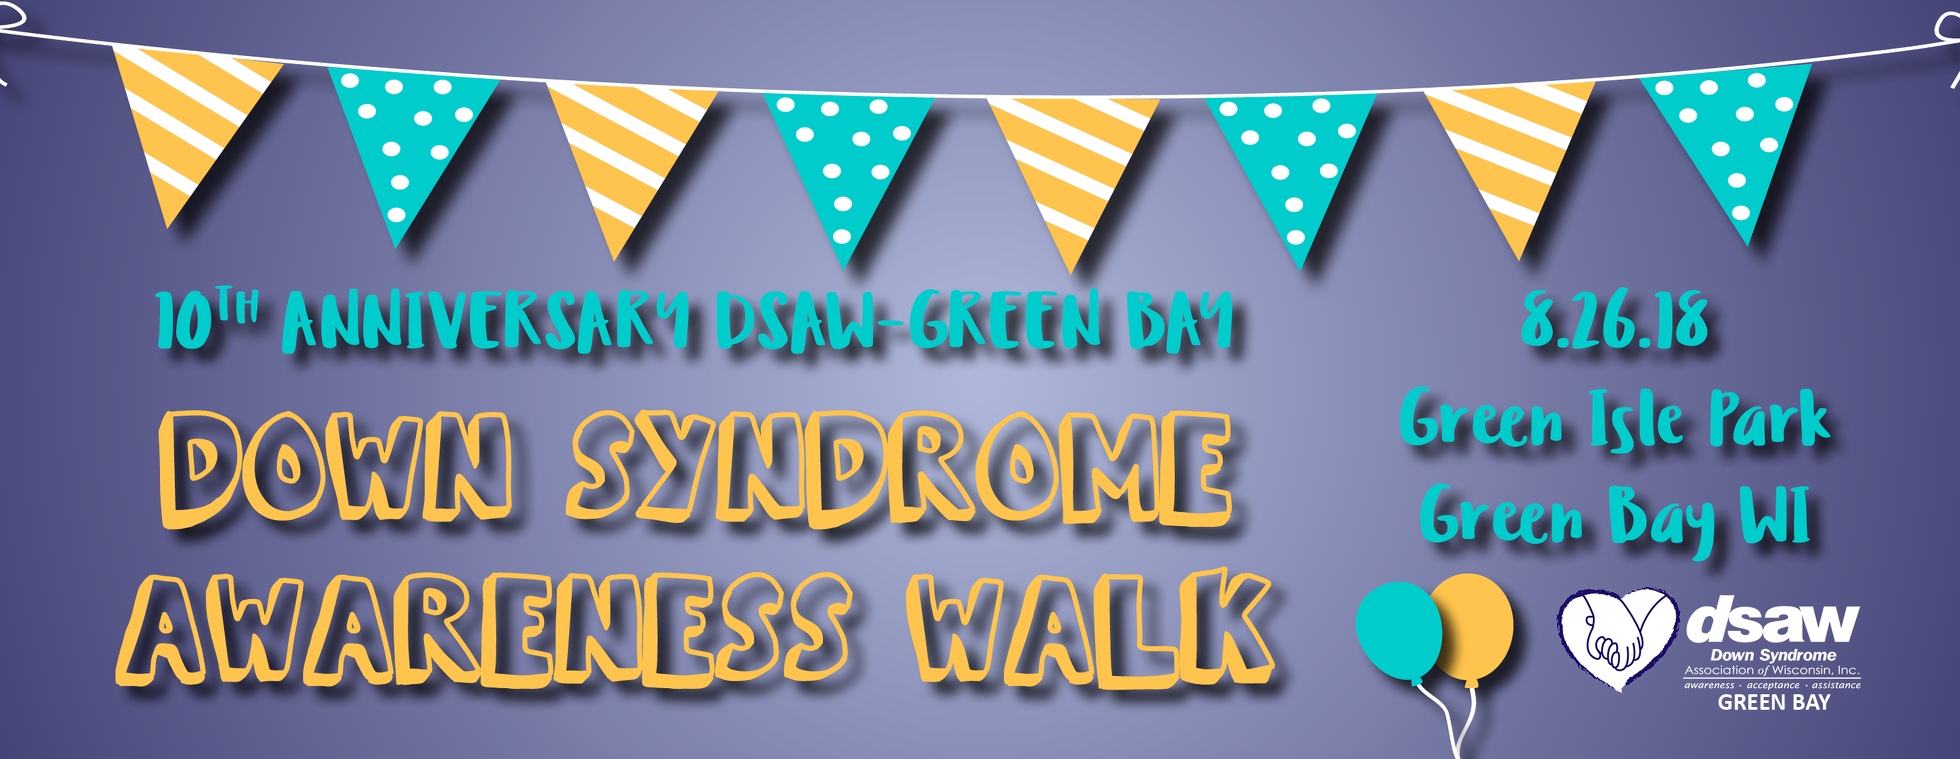 10th Anniversary Green Bay Down Syndrome Awareness Walk